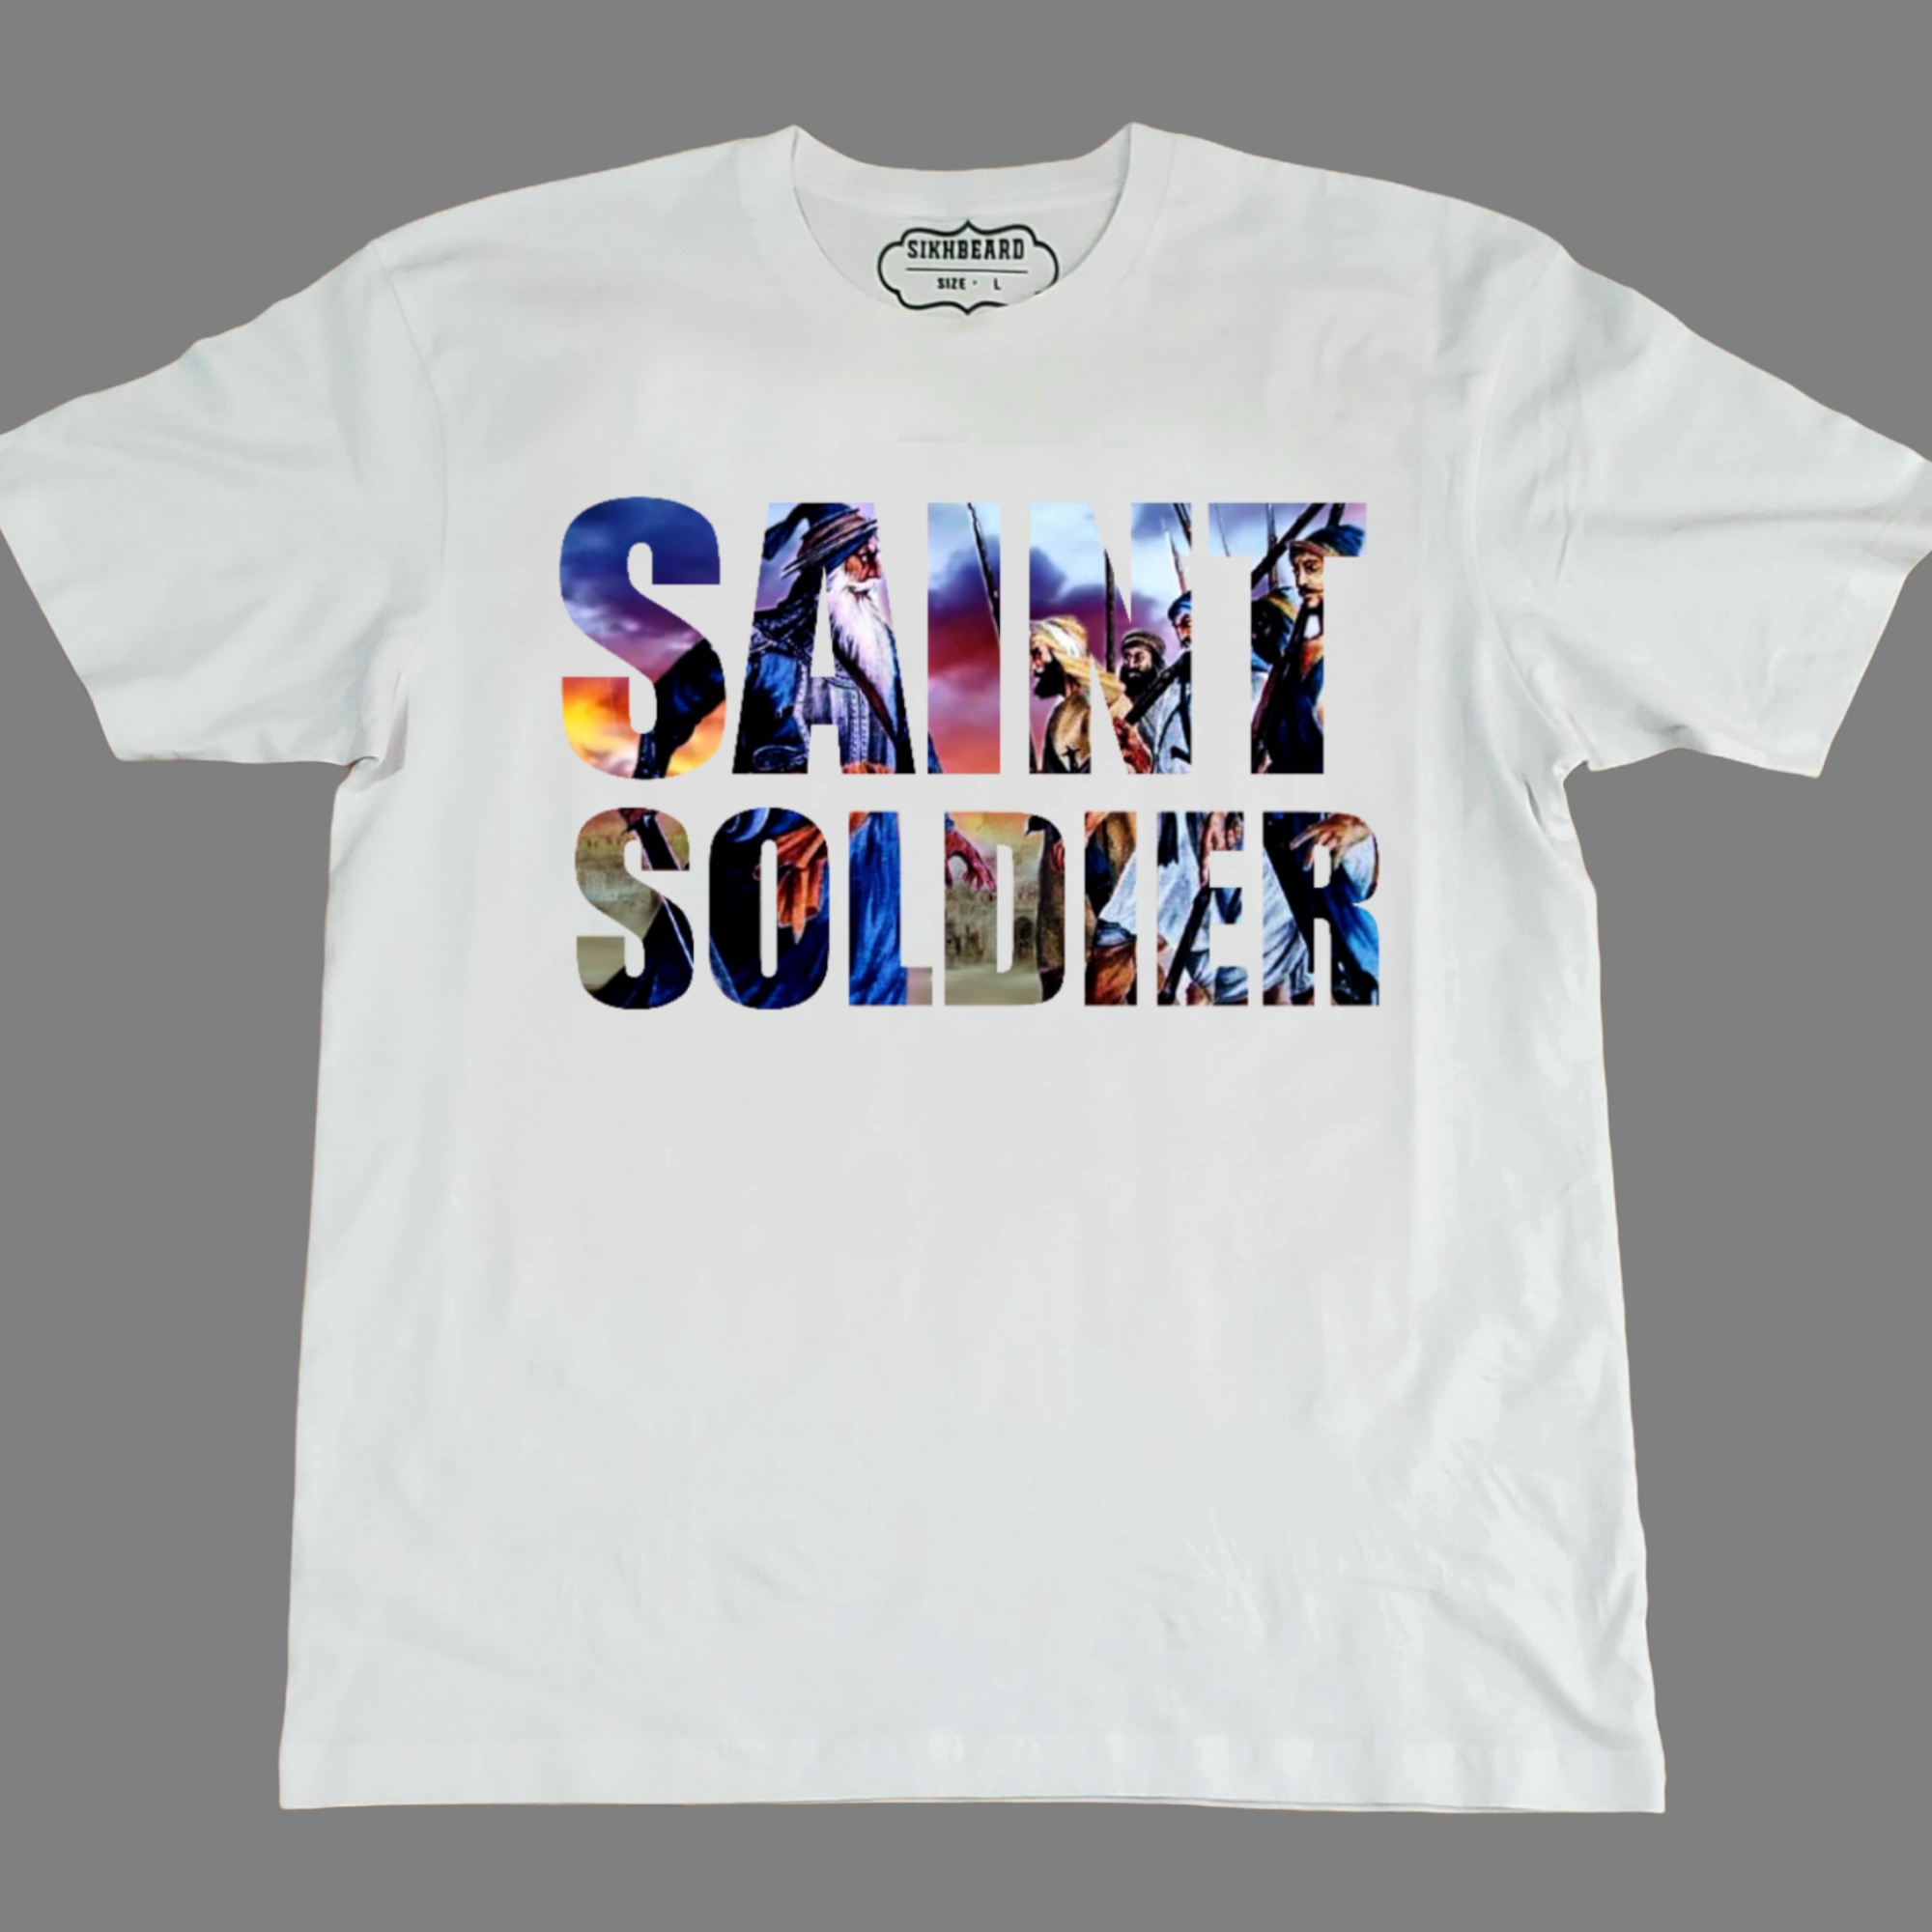 Saint Soldier T-Shirt v2